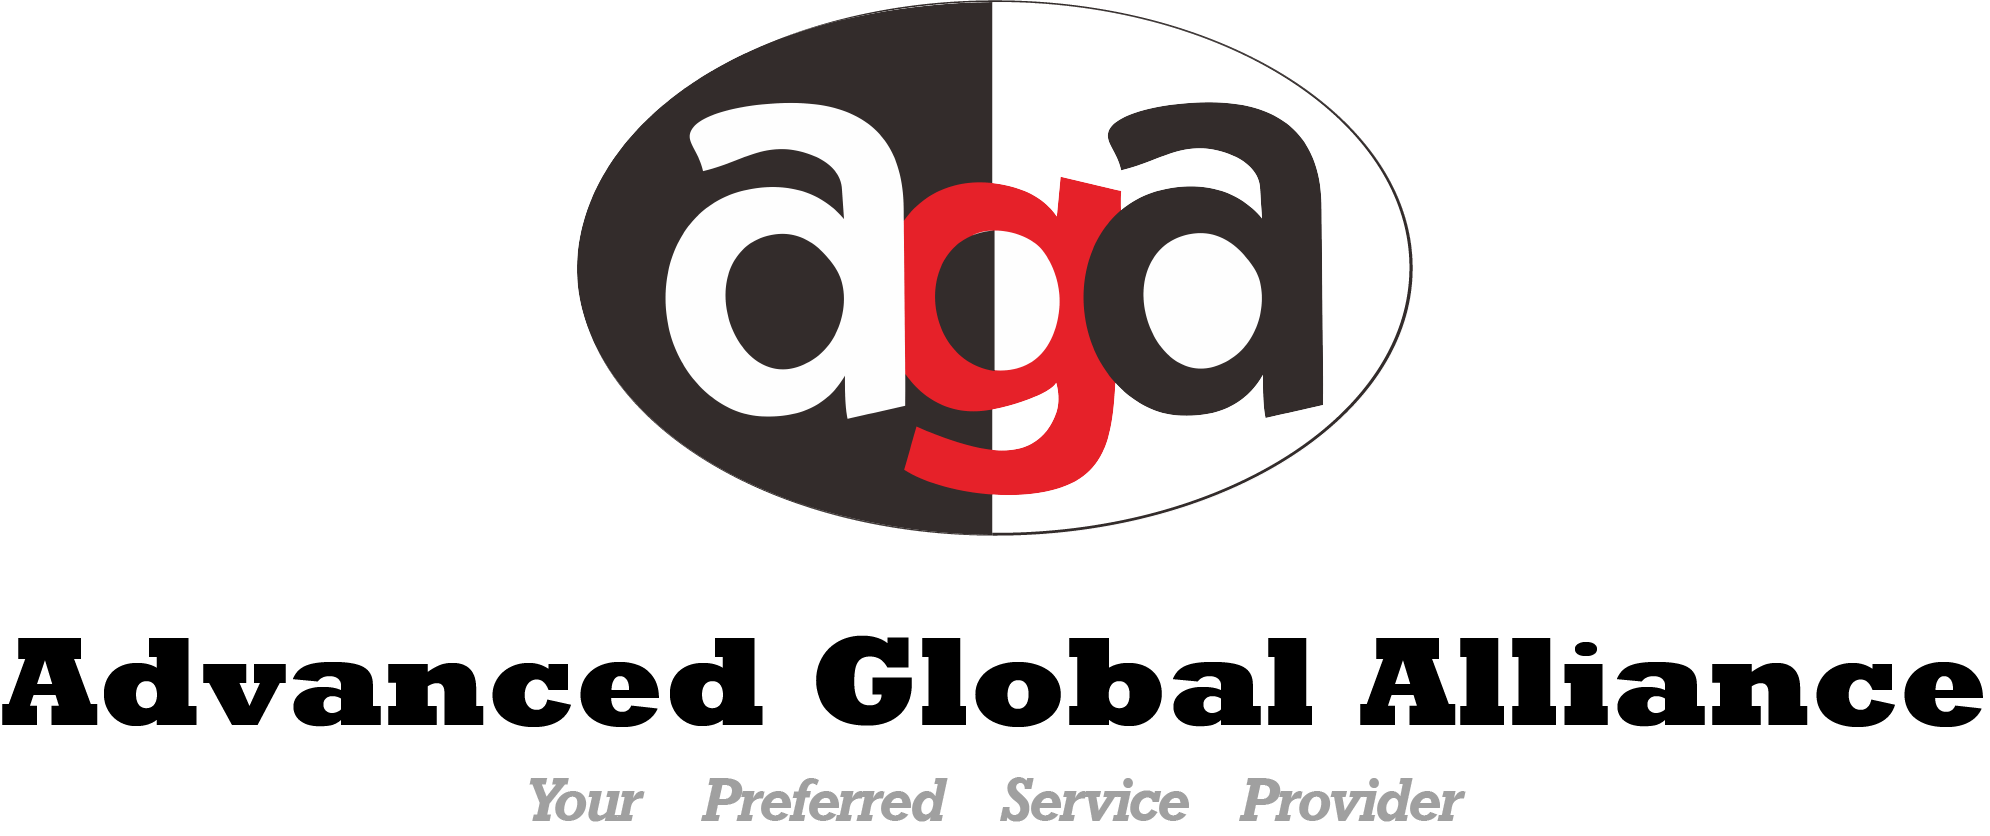 Aga Logo - Aga – Advanced Global Alliance (AGA)